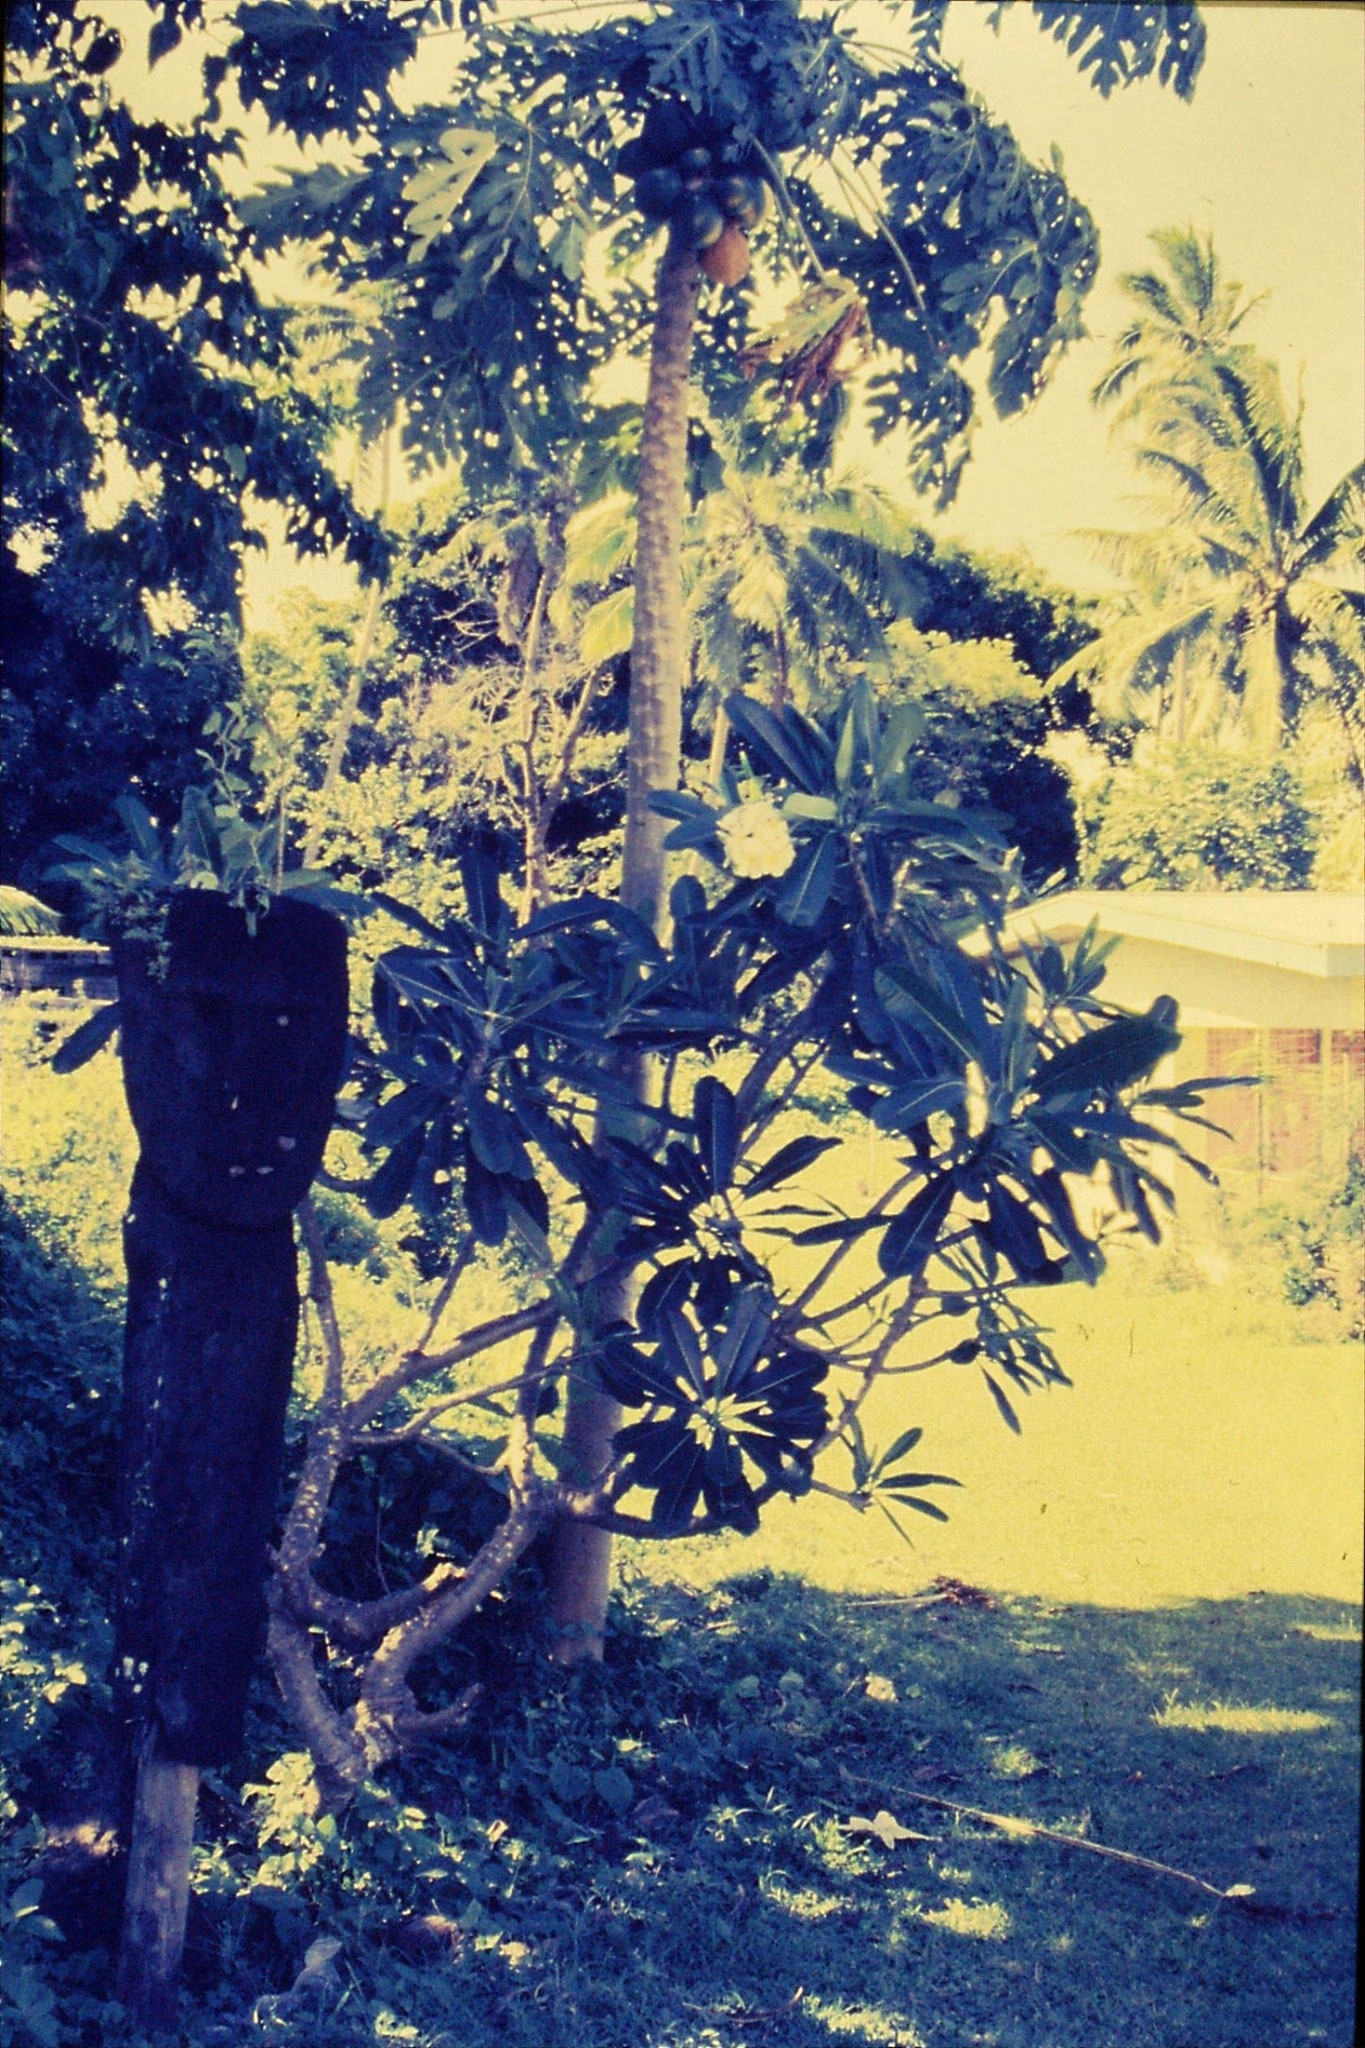 22/11/1990: 20: Somosomo, house with totem, papaya and frangipani